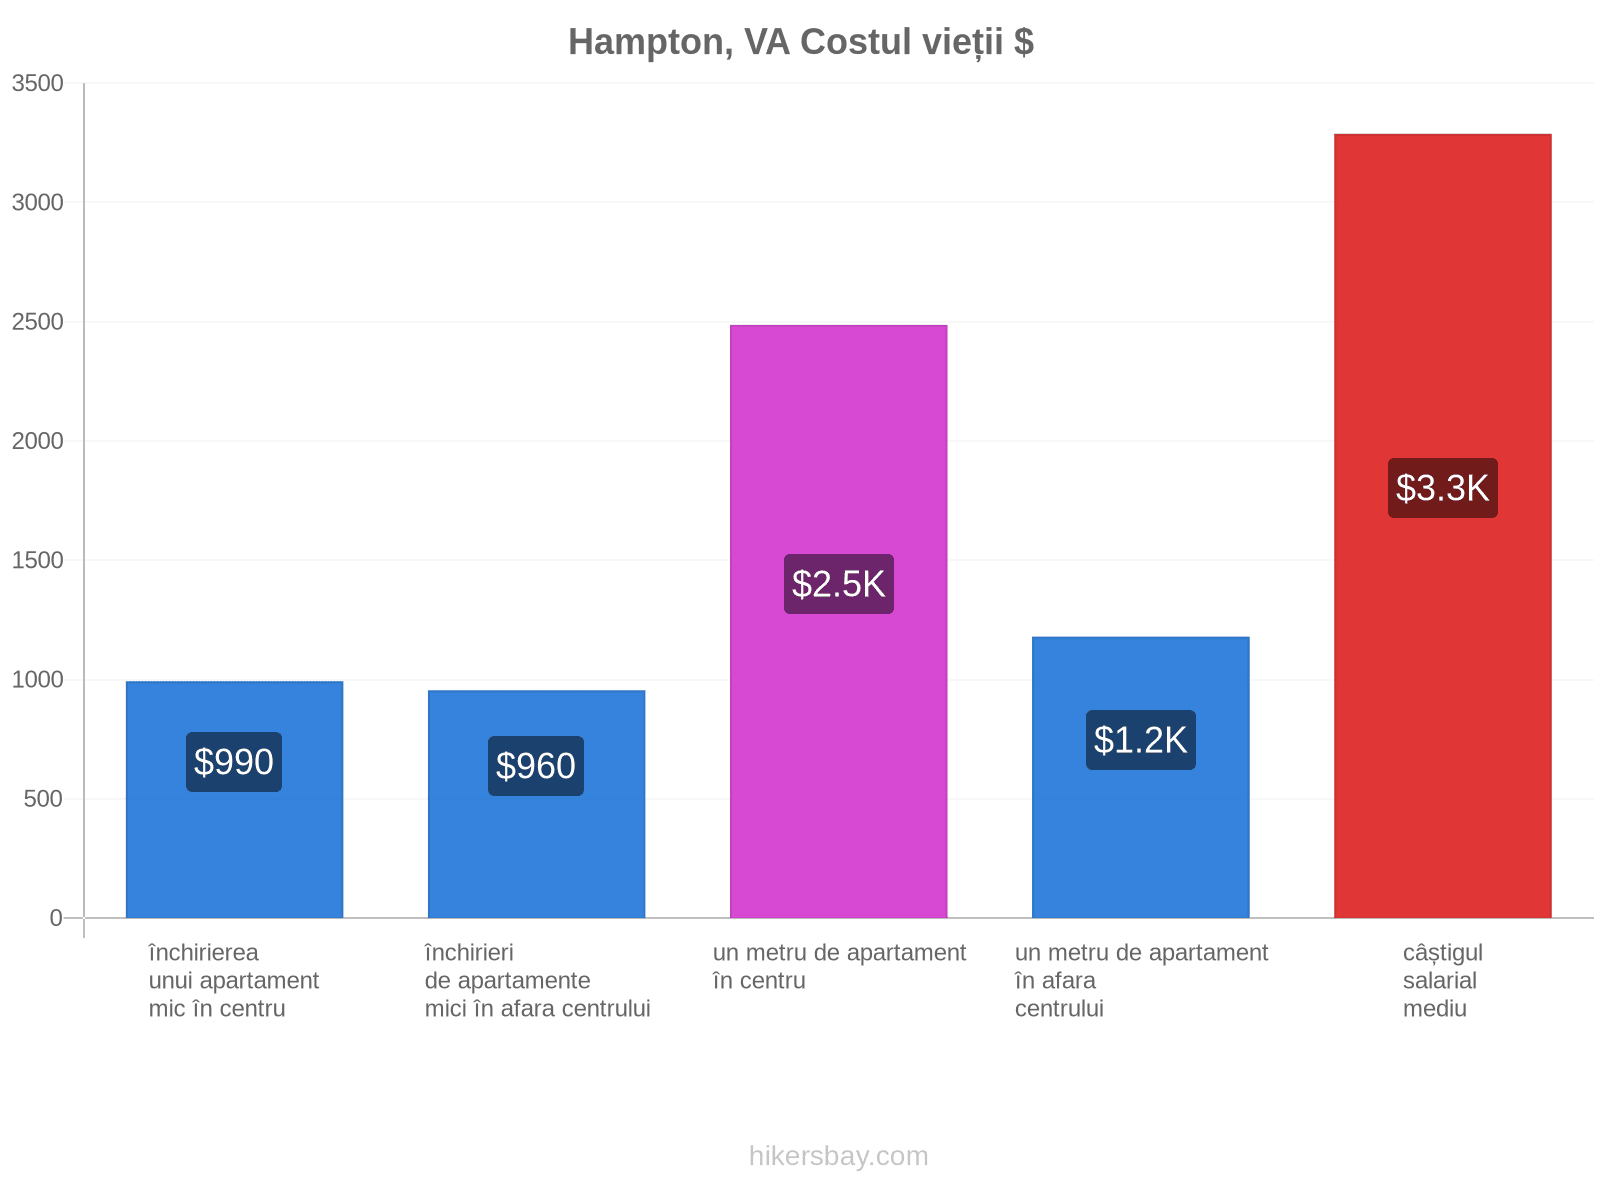 Hampton, VA costul vieții hikersbay.com